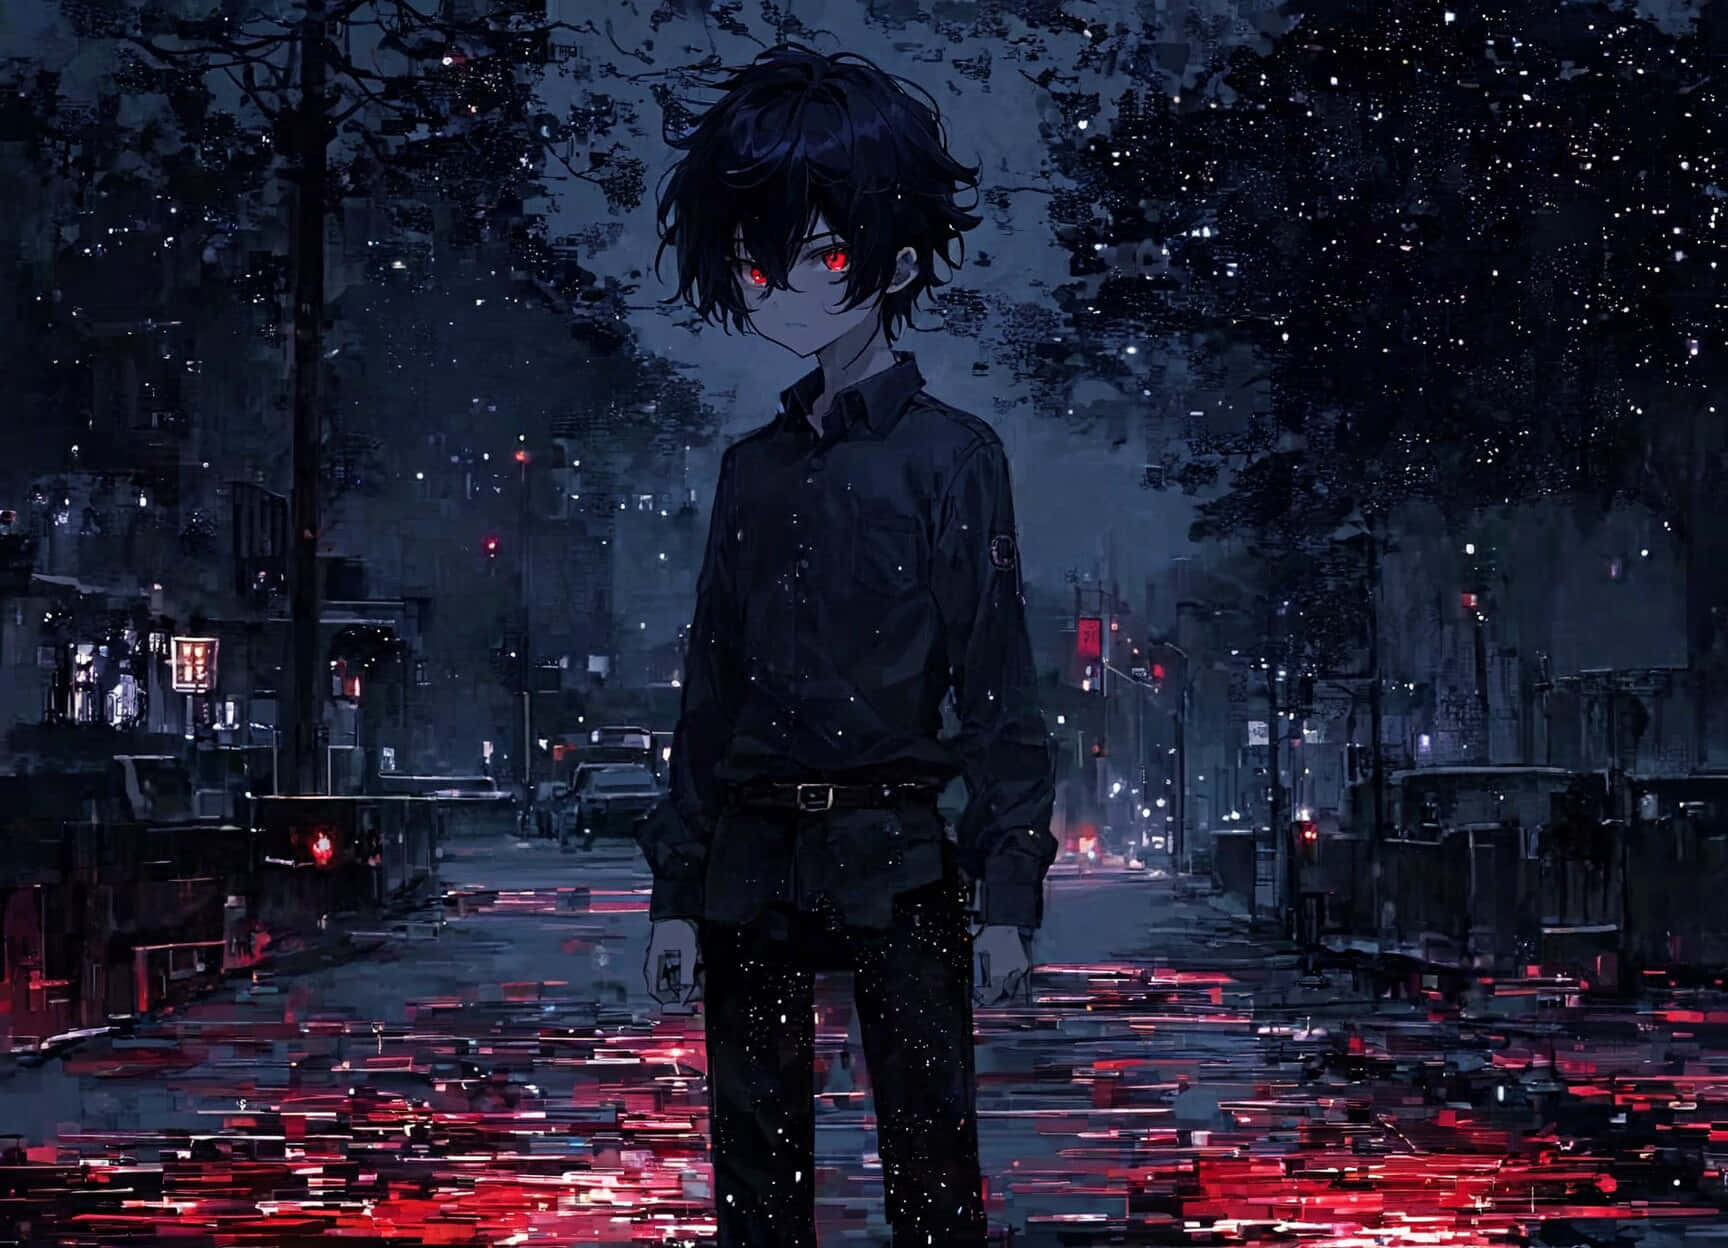 Mysterious Anime Boyin Rainy City Night.jpg Wallpaper